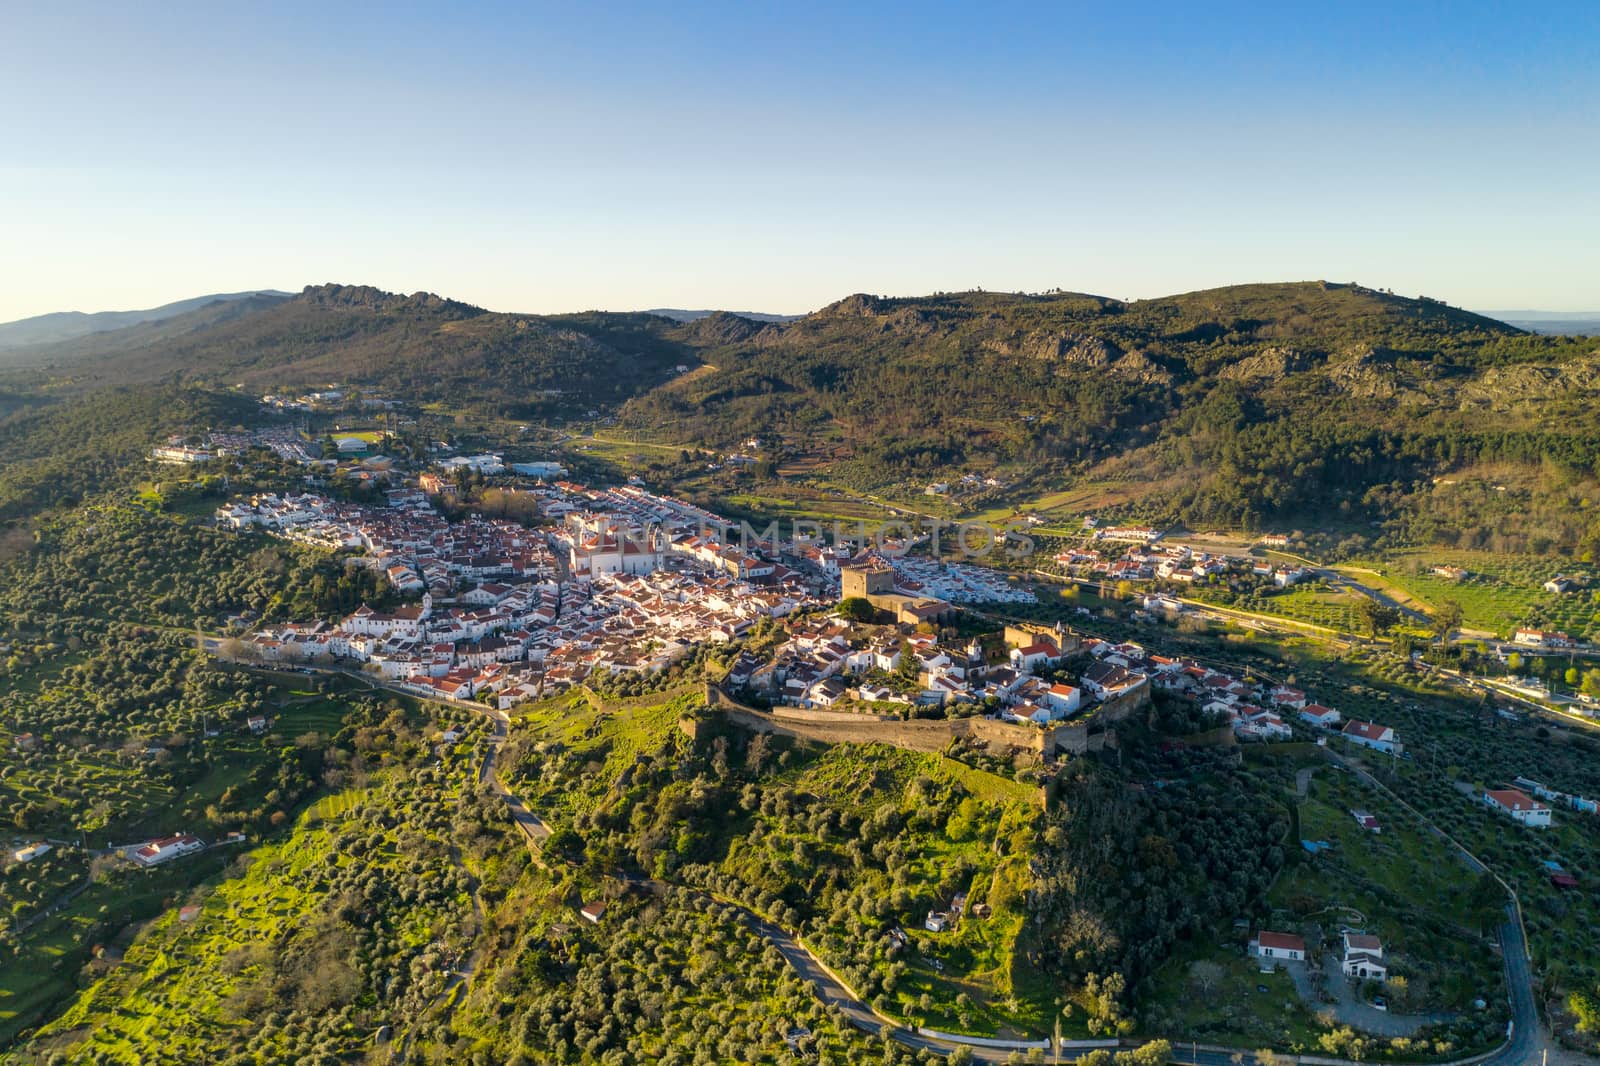 Castelo de Vide drone aerial view in Alentejo, Portugal from Serra de Sao Mamede mountains by Luispinaphotography